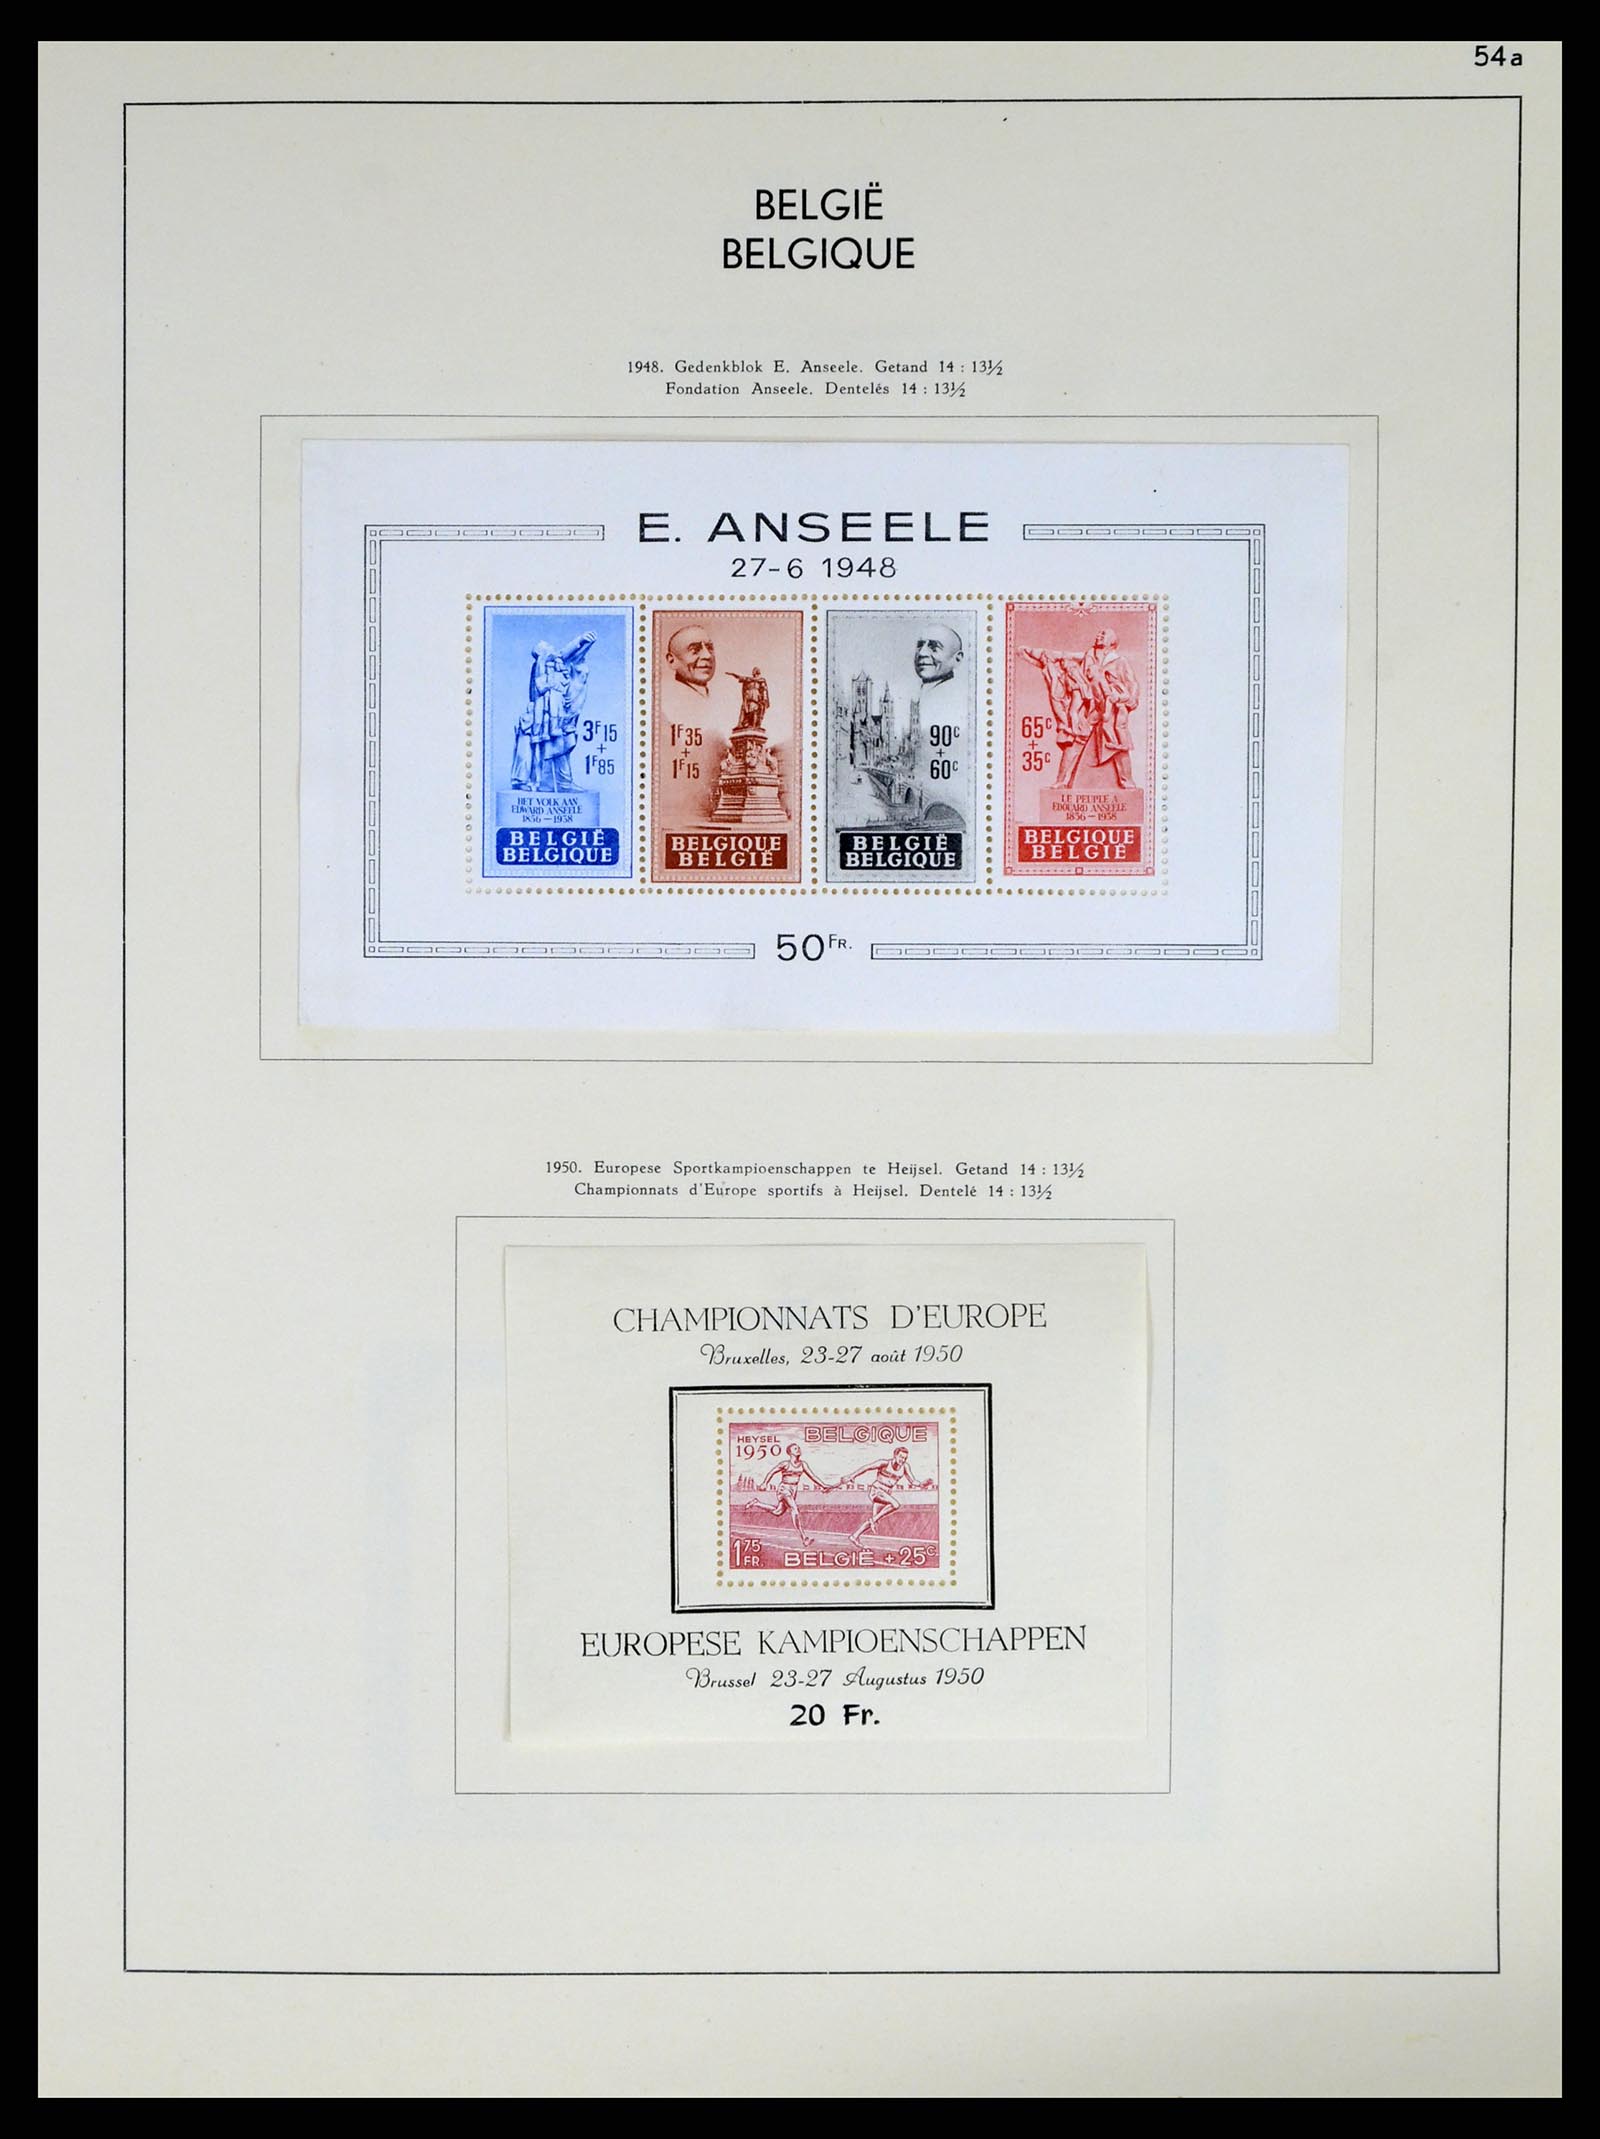 37959 075 - Stamp Collection 37959 Belgium and Belgian Congo 1849-1960.